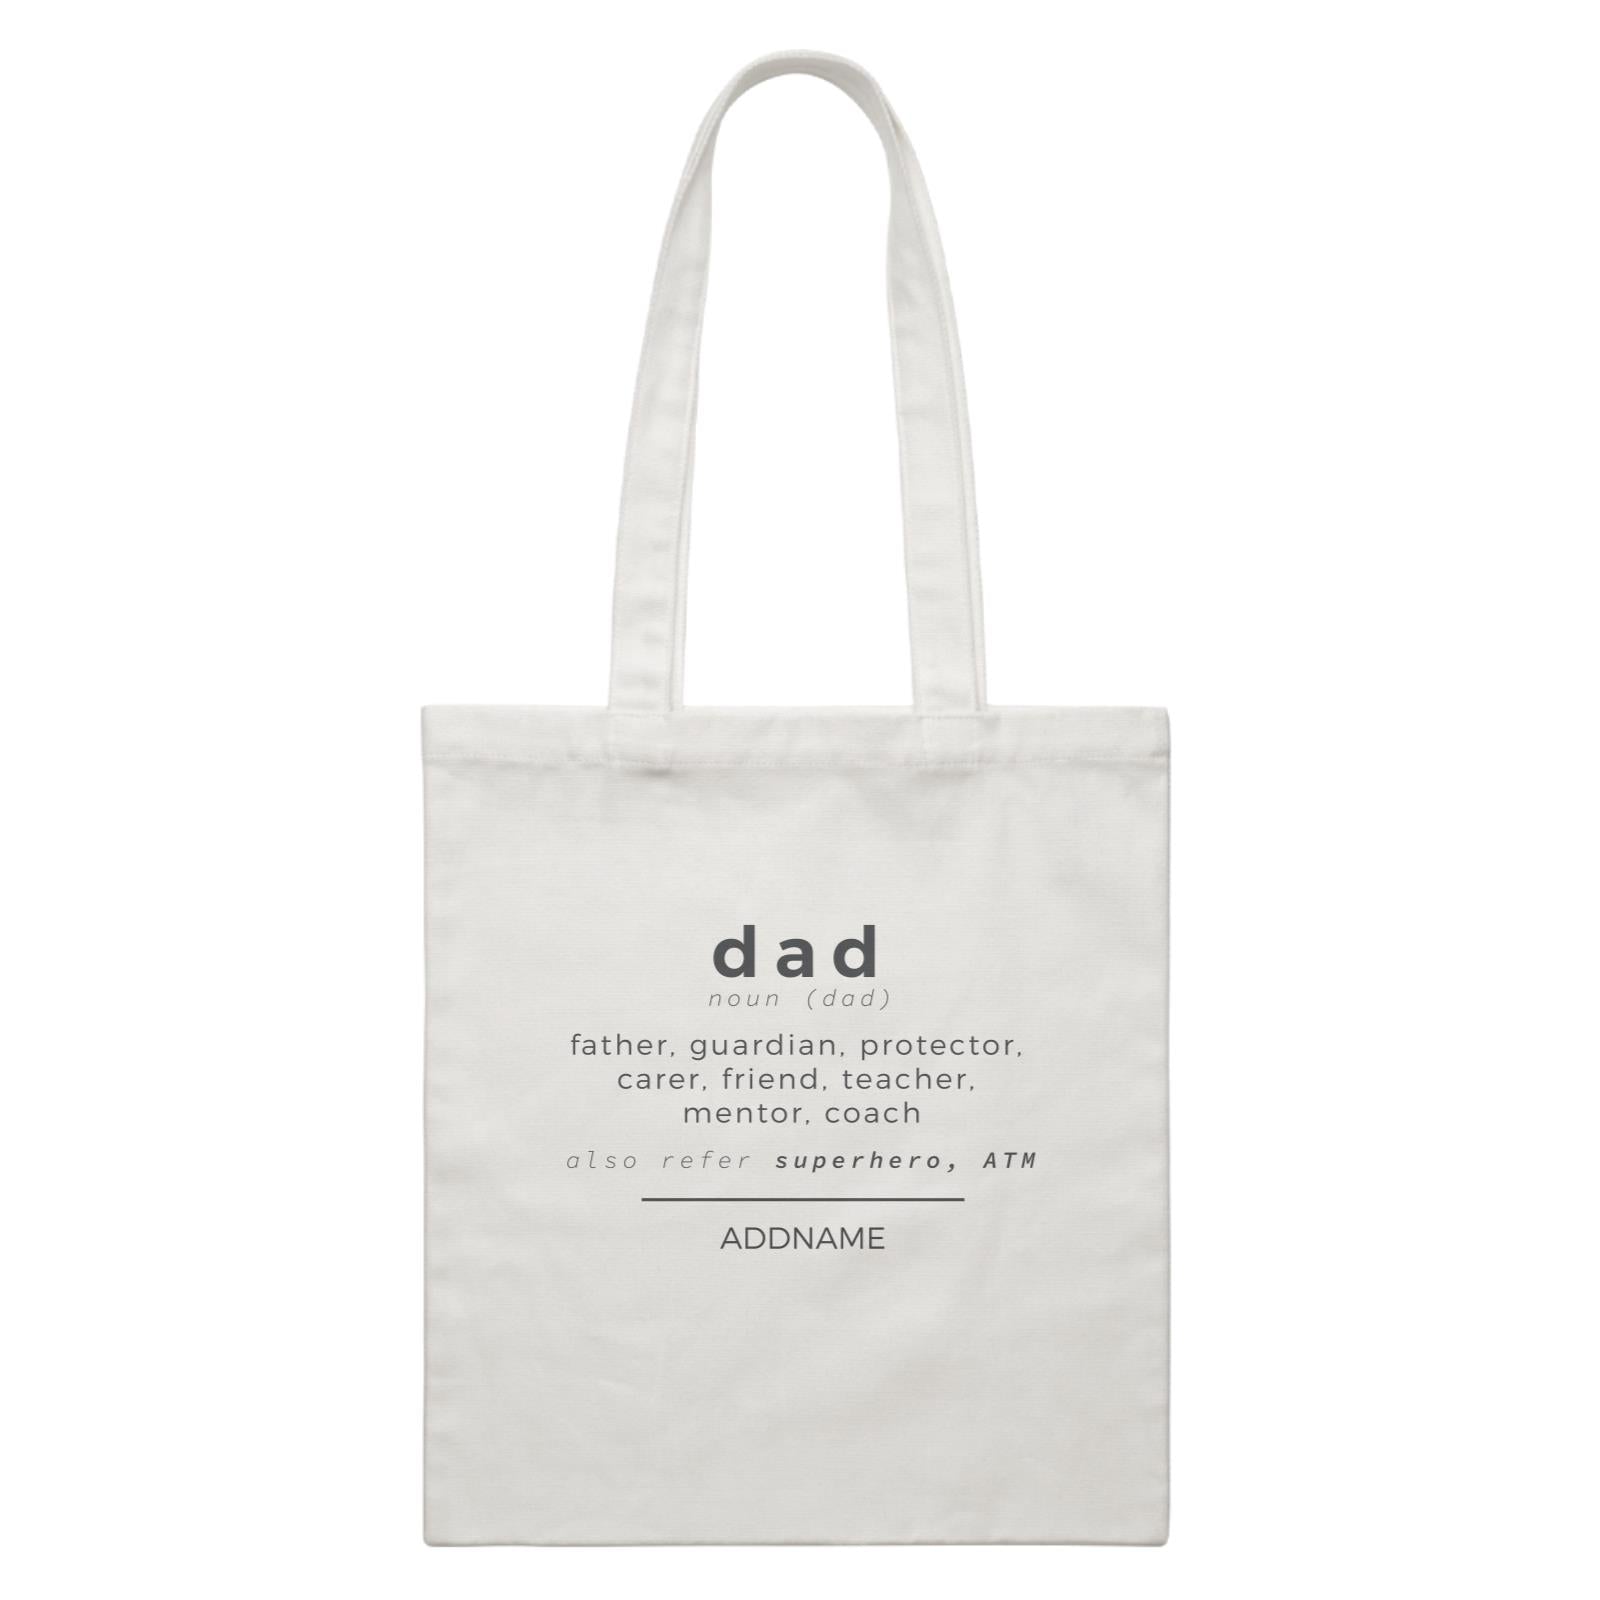 Dad Definition Dad Noun Definition Addname White Canvas Bag